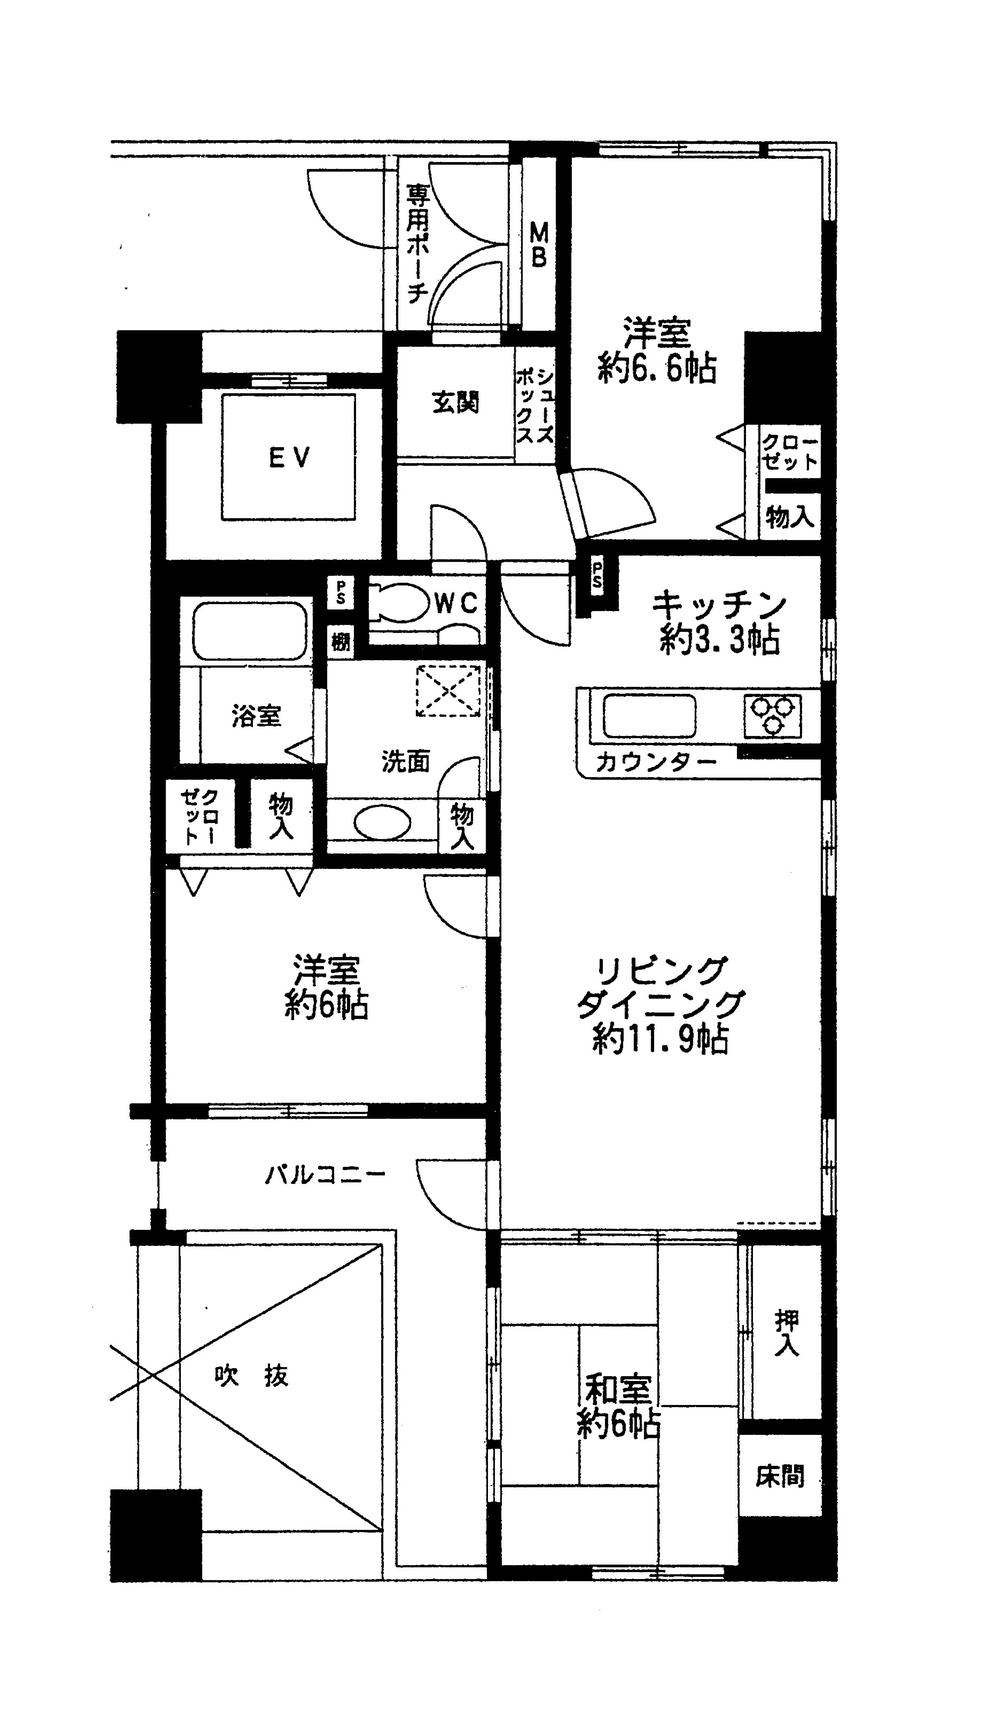 Floor plan. 3LDK, Price 28.8 million yen, Occupied area 77.47 sq m , Balcony area 9.02 sq m pets (dog ・ Cat) is possible breeding.